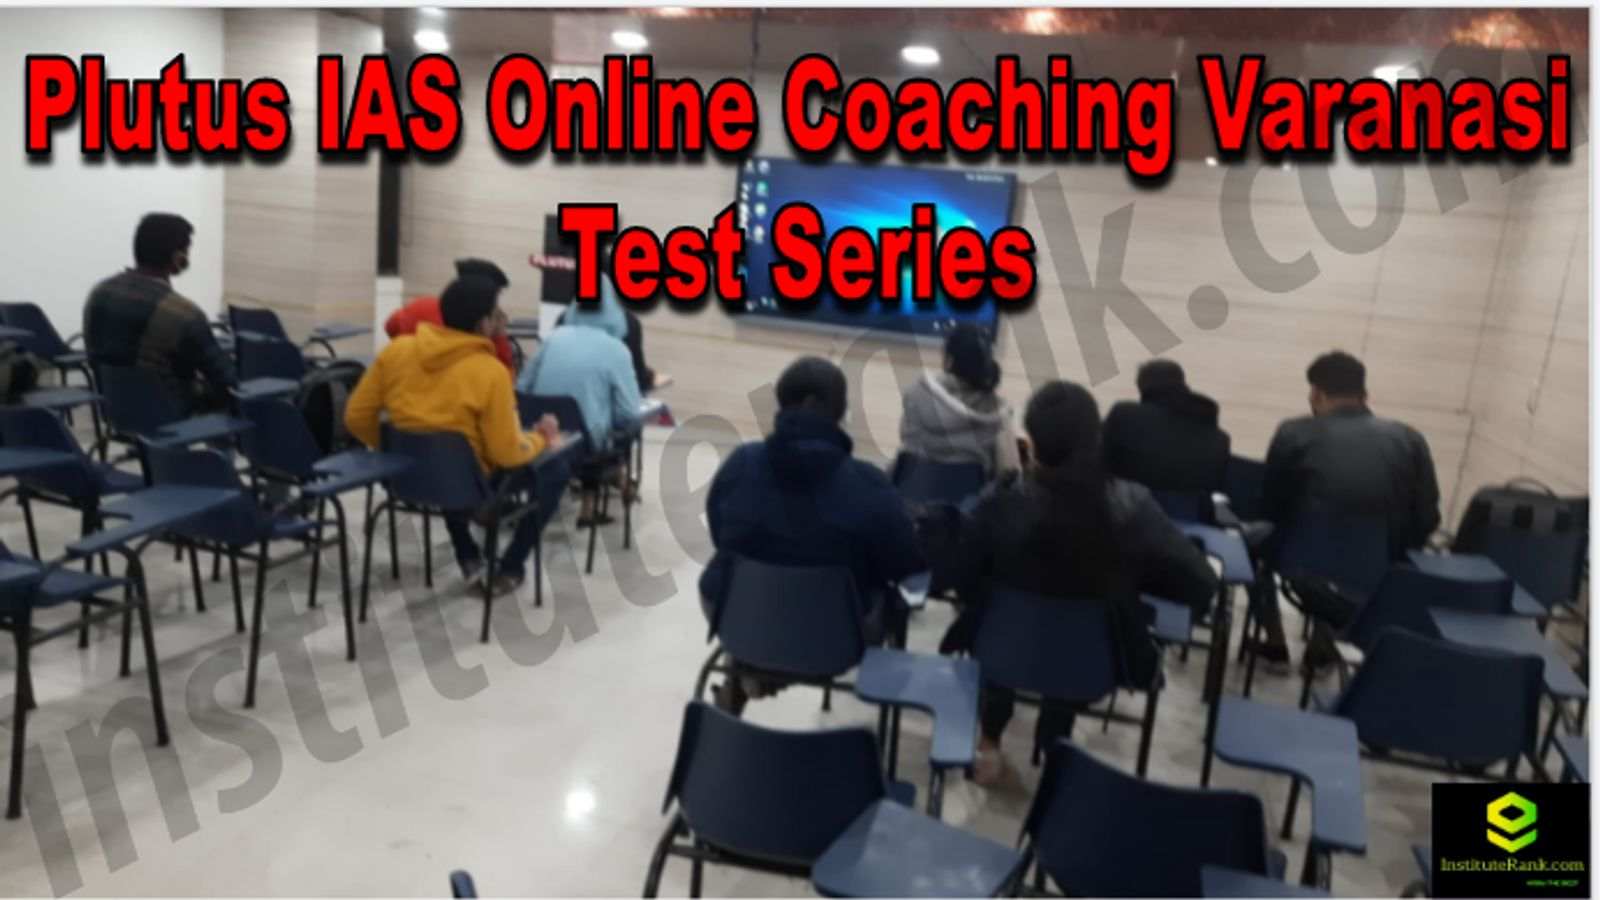 Plutus IAS Online Coaching Varanasi Reviews Test Series